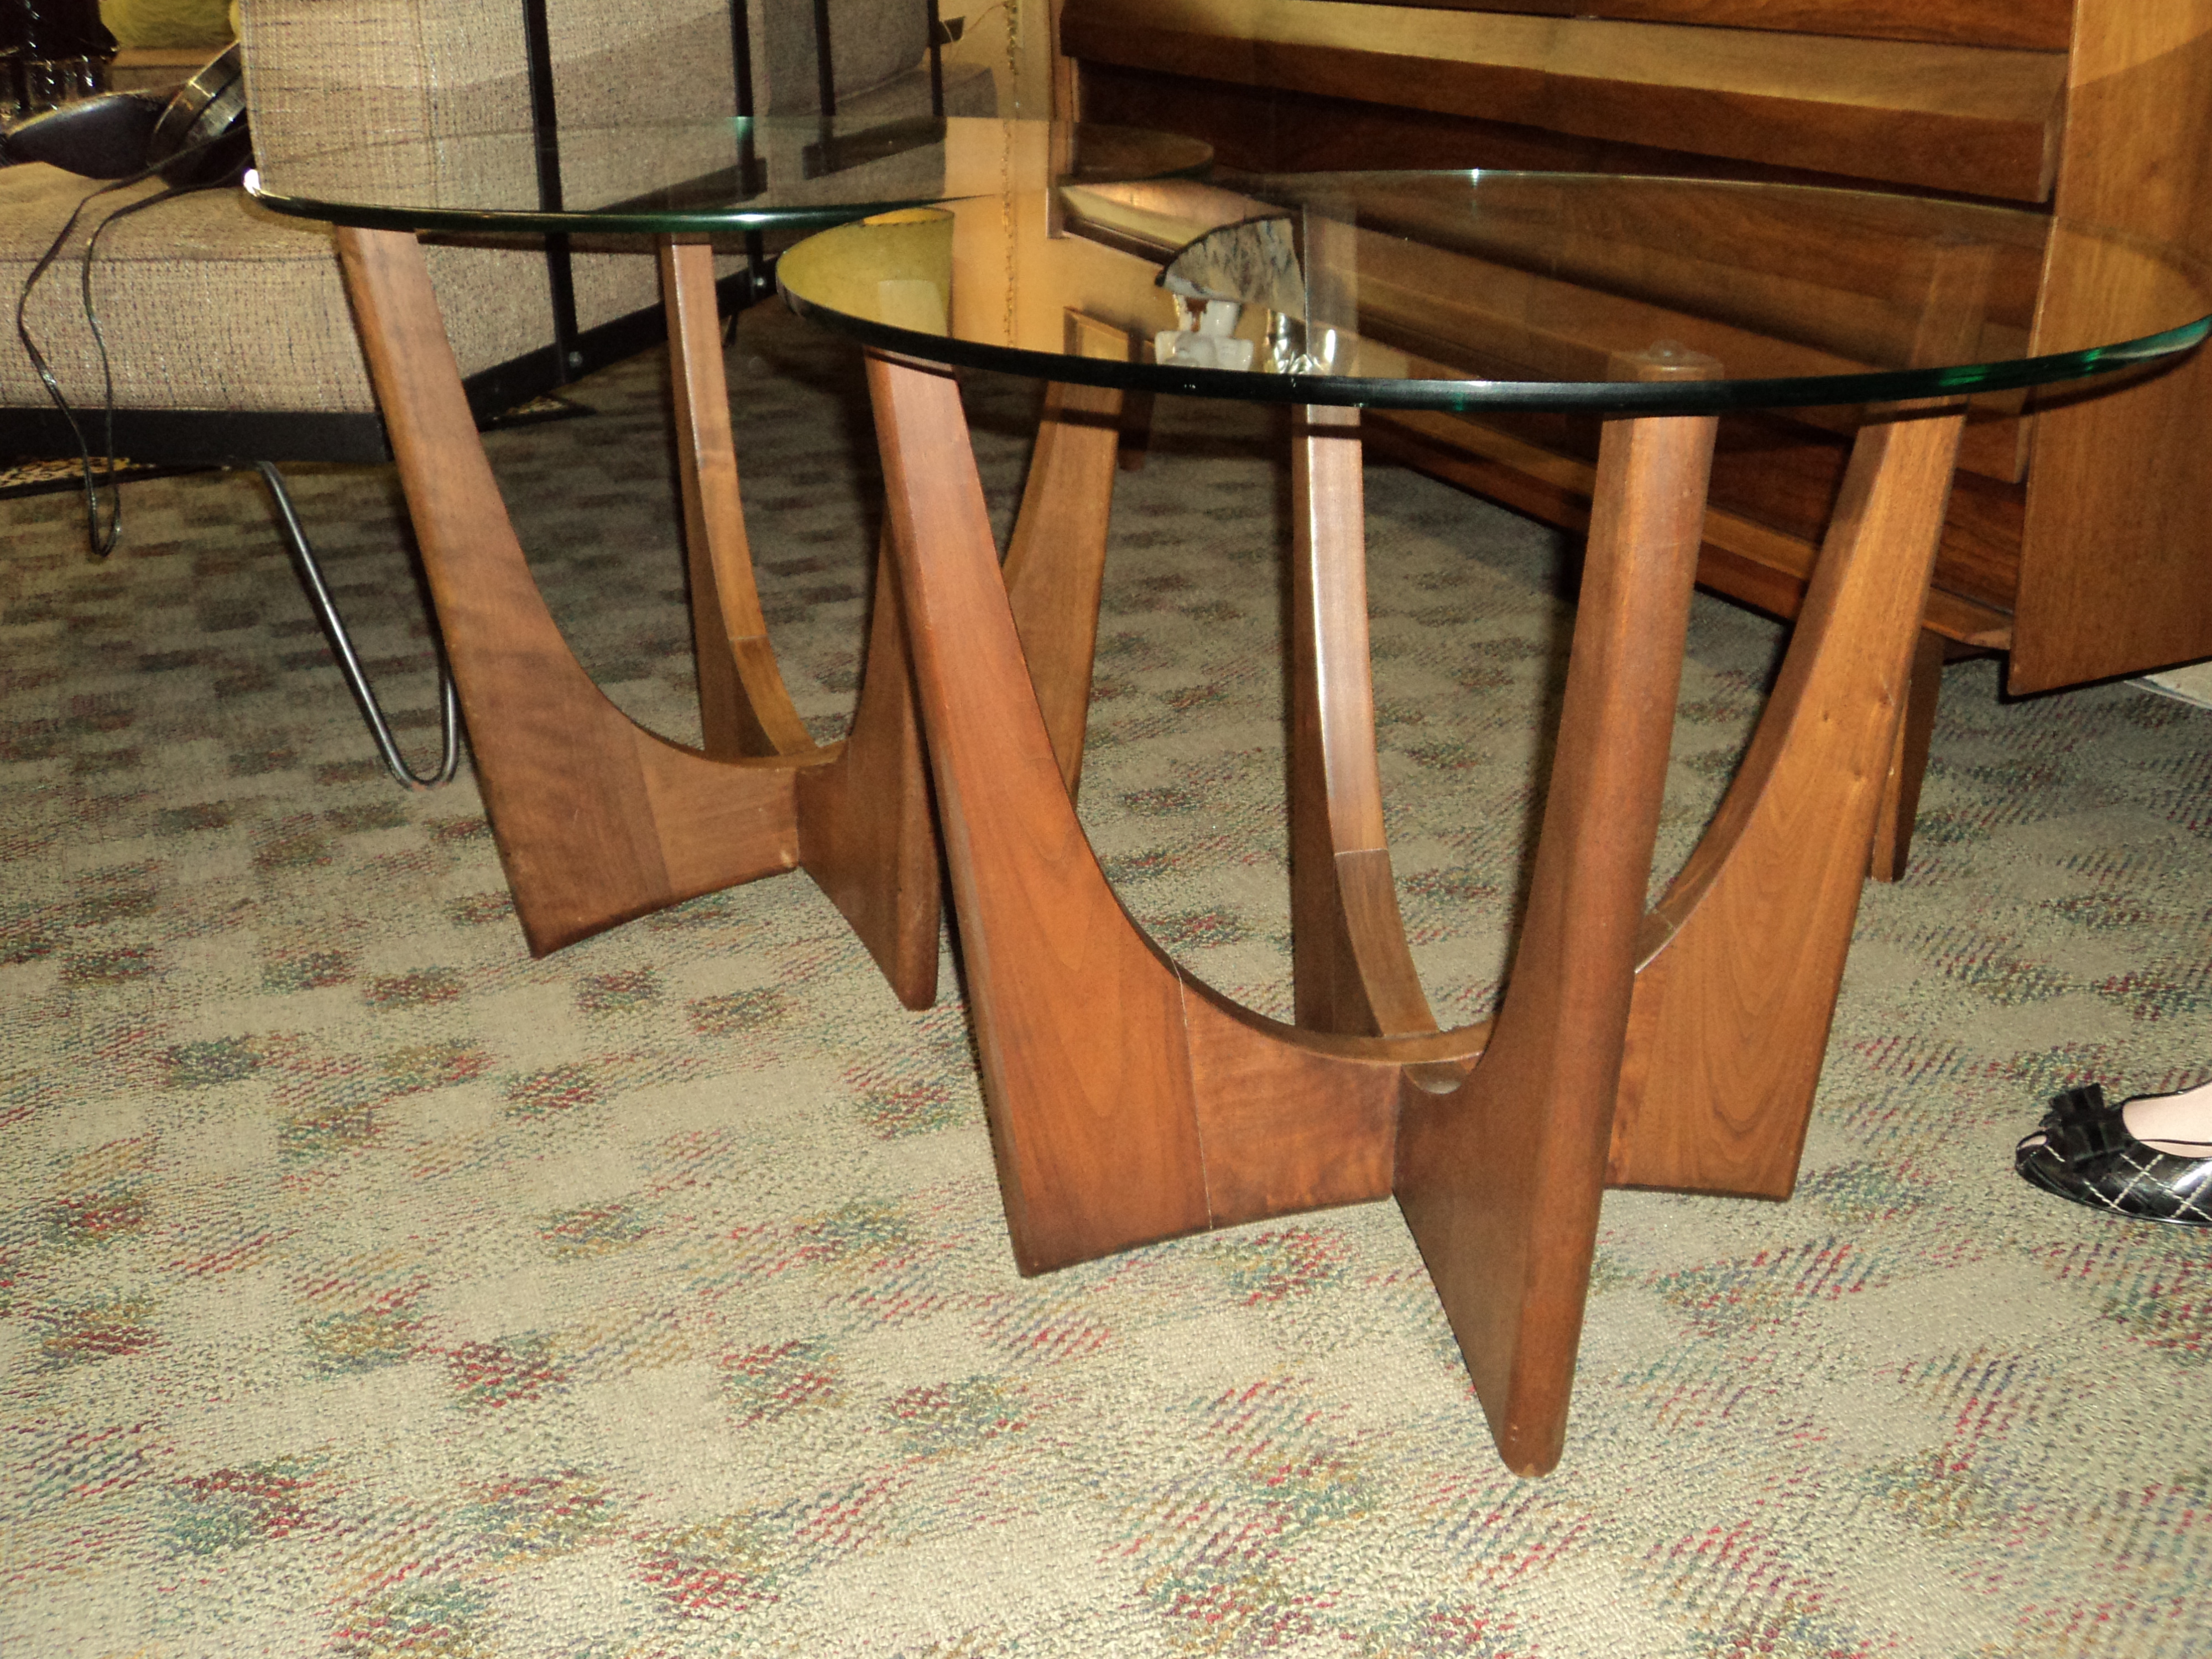 438 All New Craigslist Furniture By Owner Yakima Wa